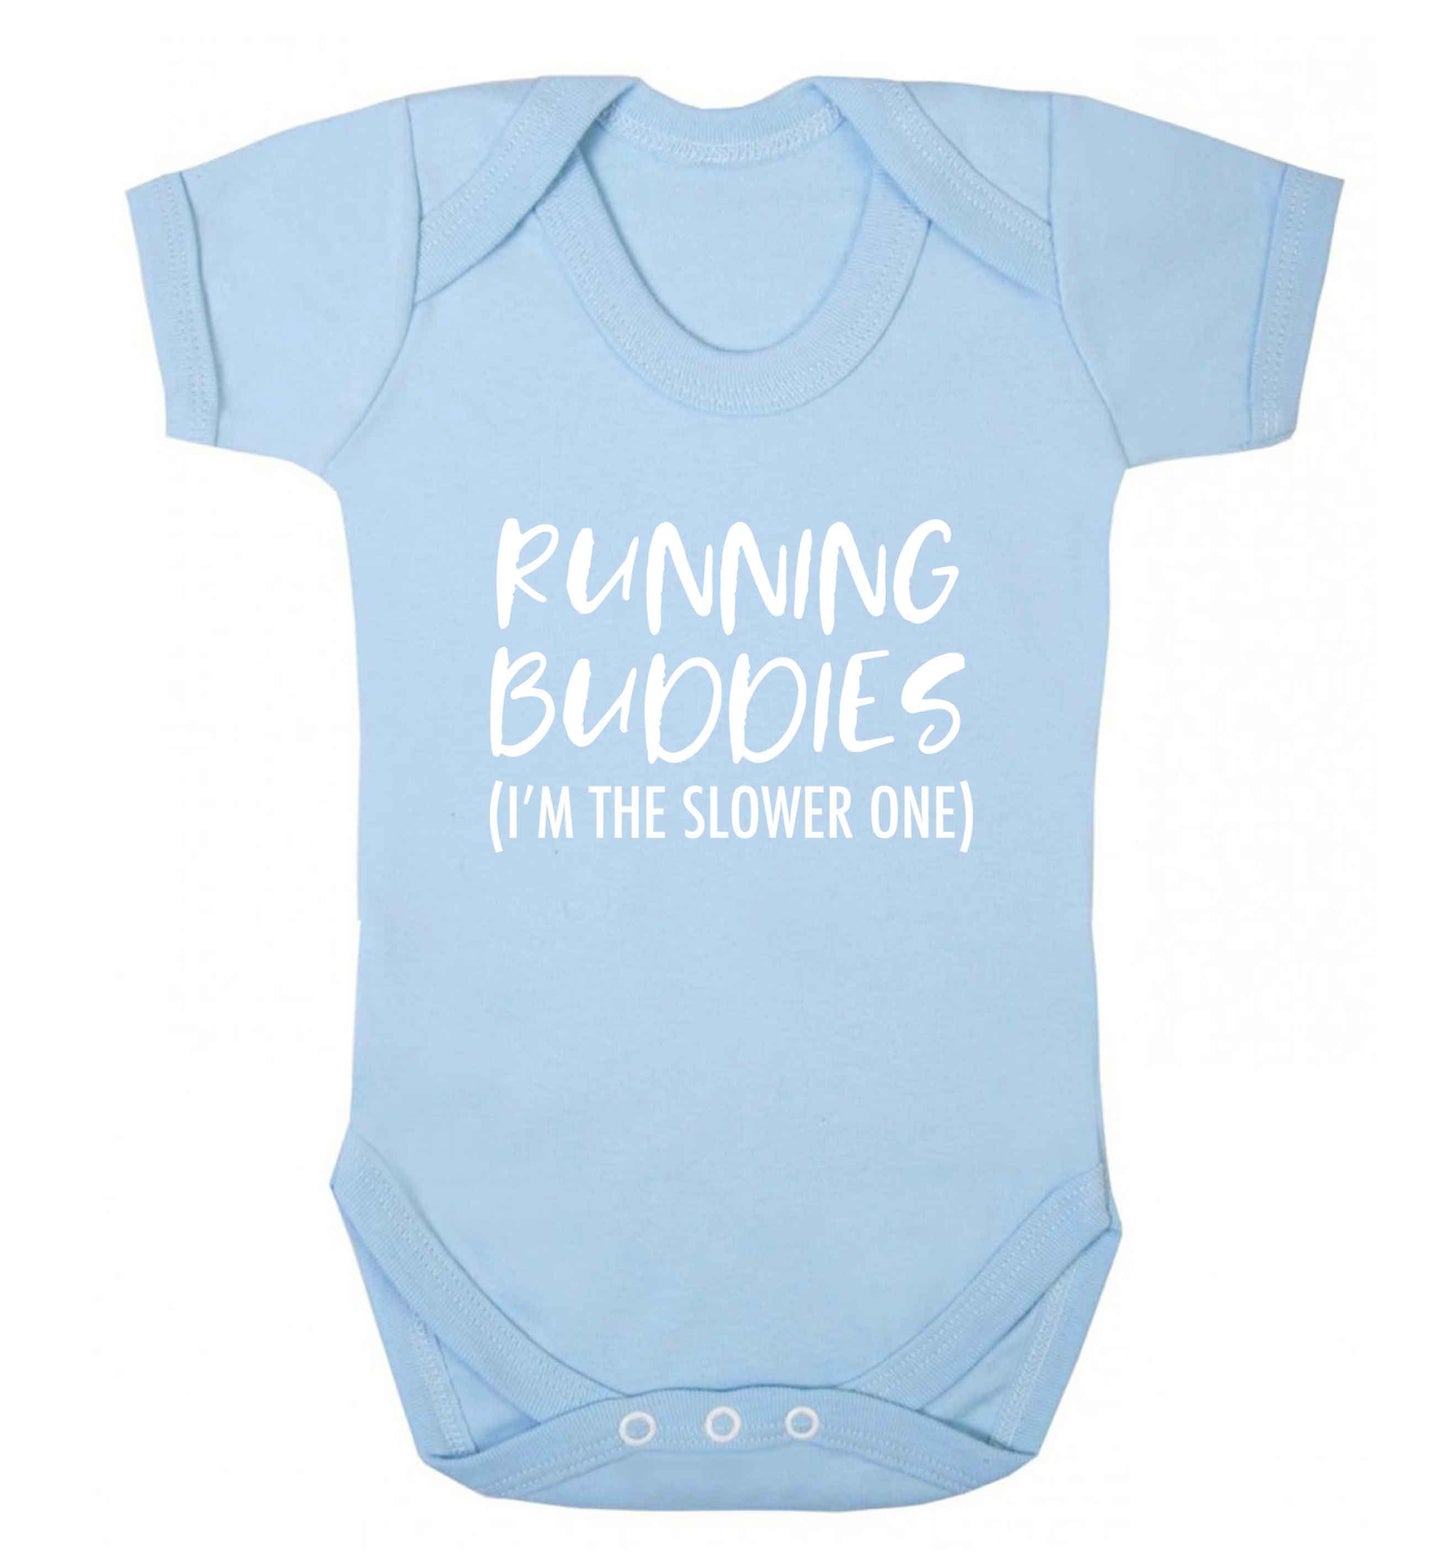 Running buddies (I'm the slower one) baby vest pale blue 18-24 months